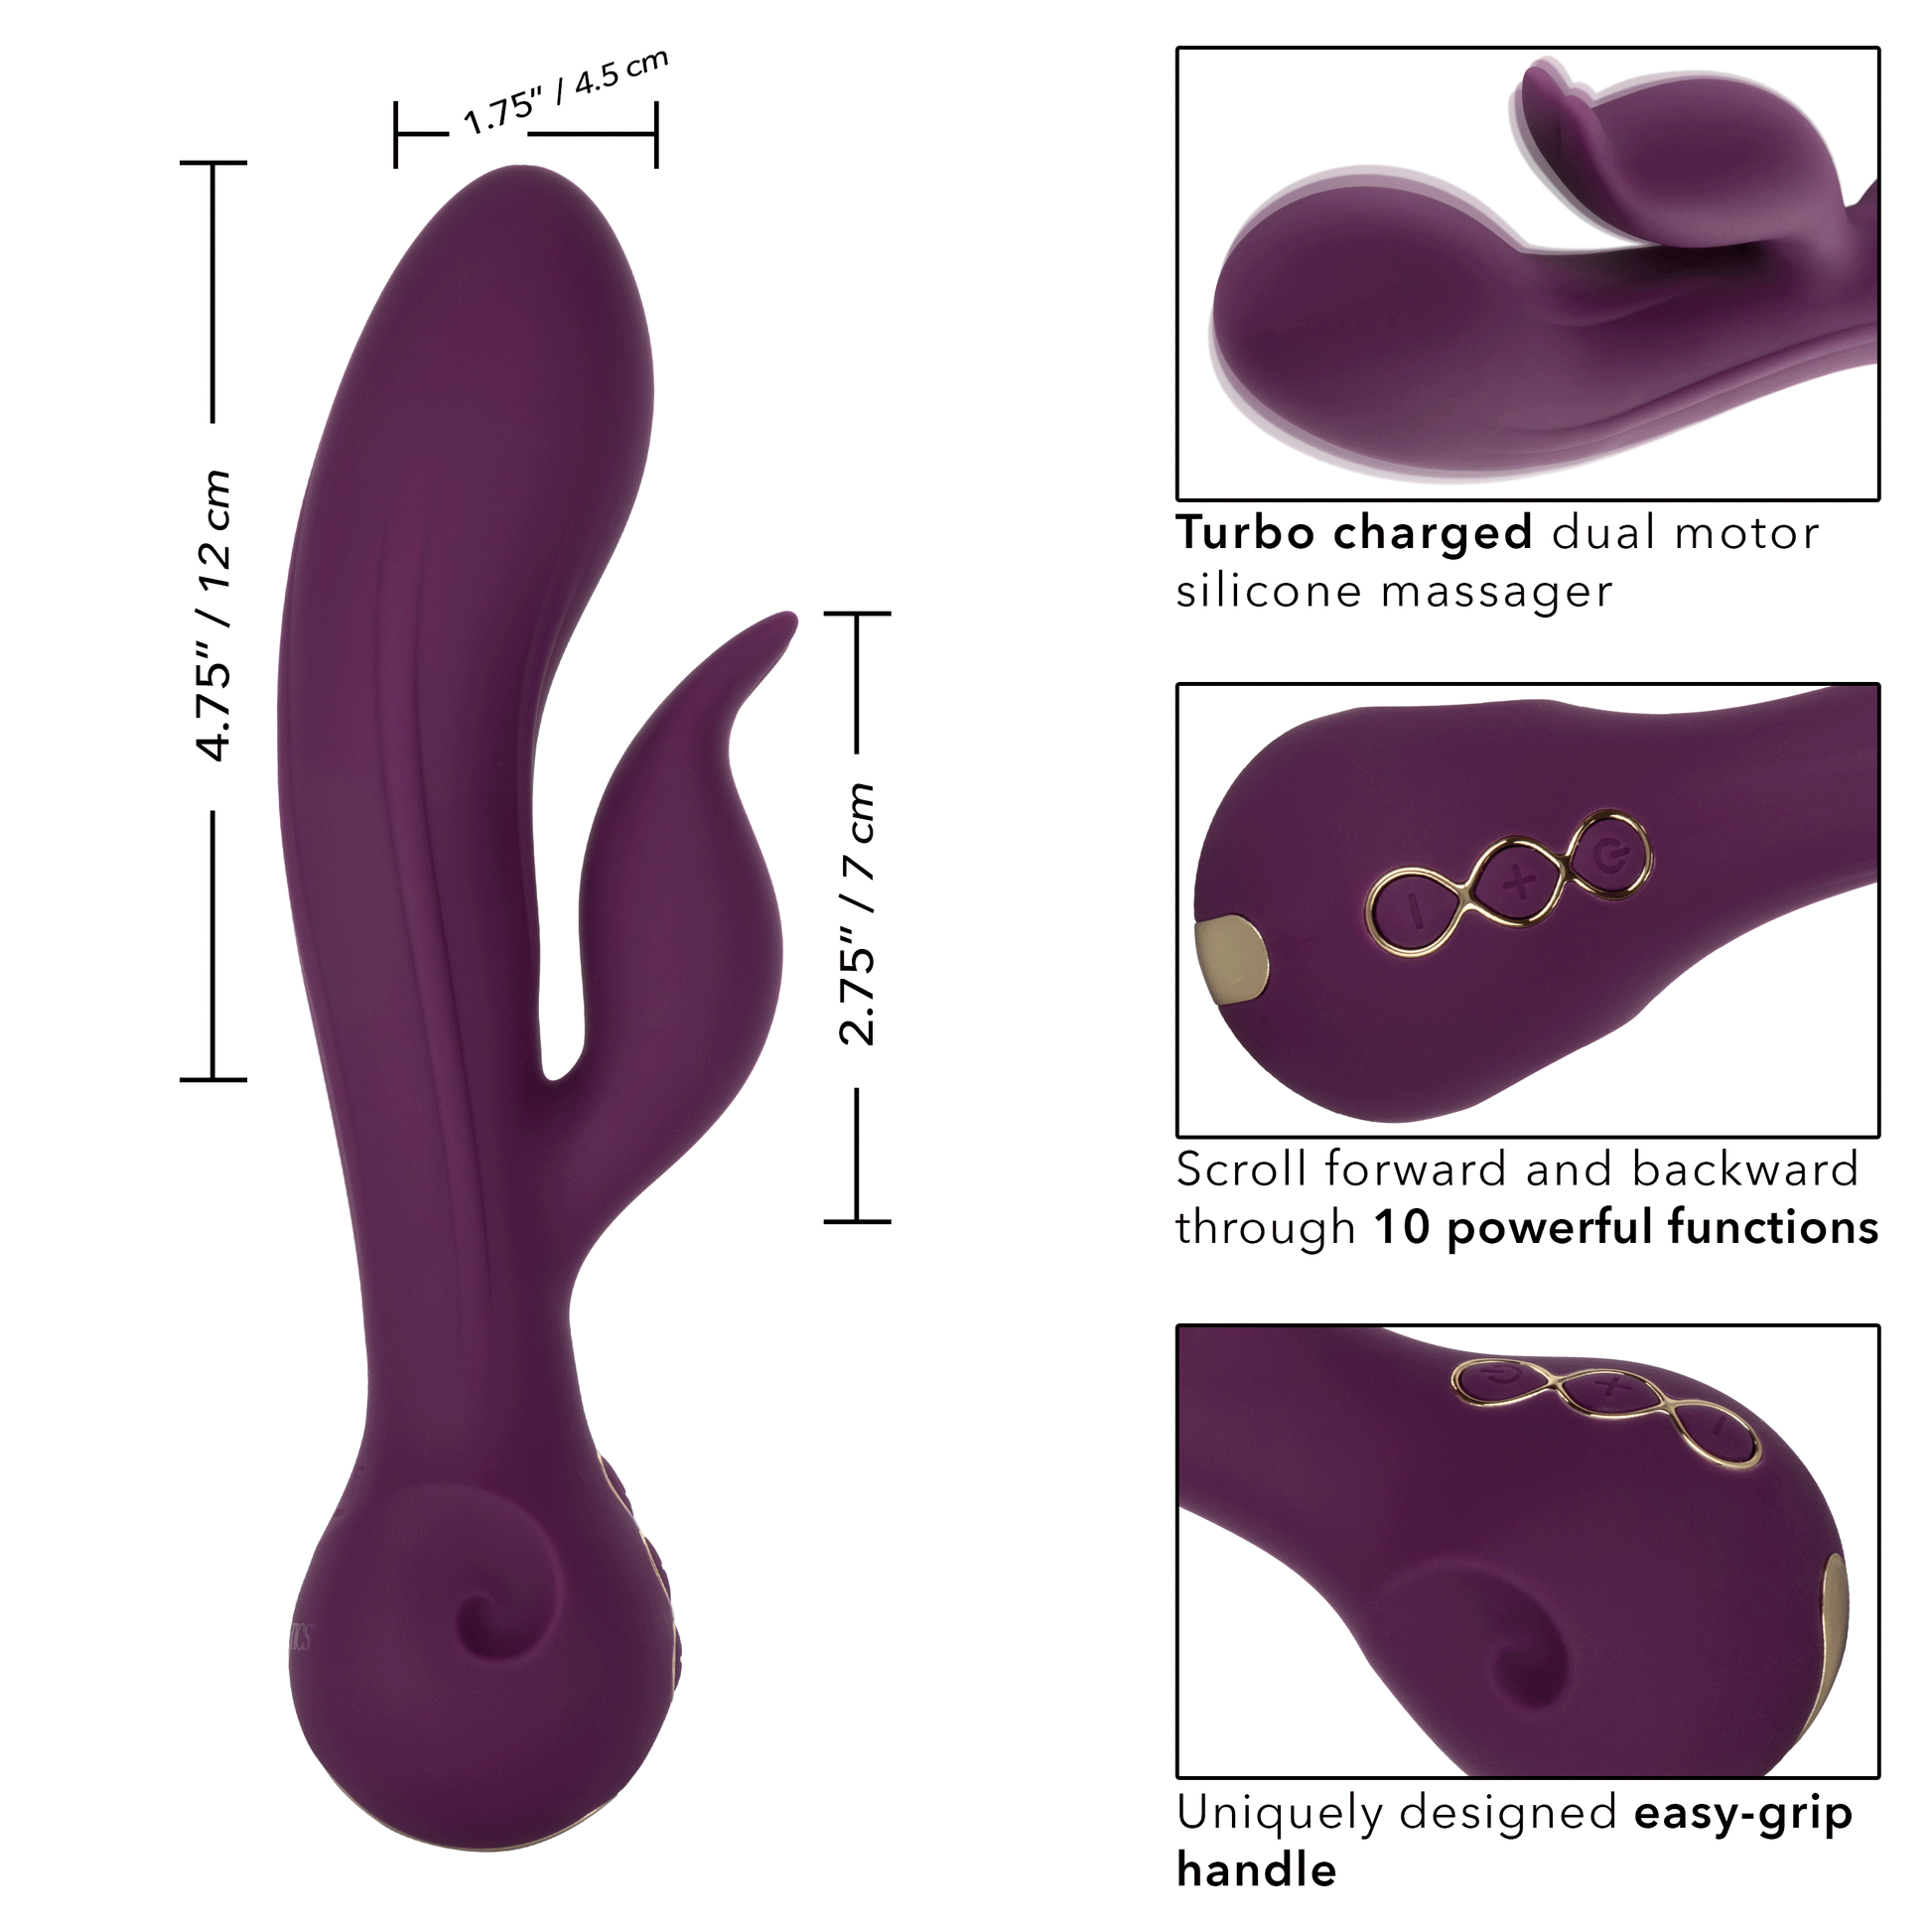 Obsession - Desire - Purple - My Sex Toy Hub